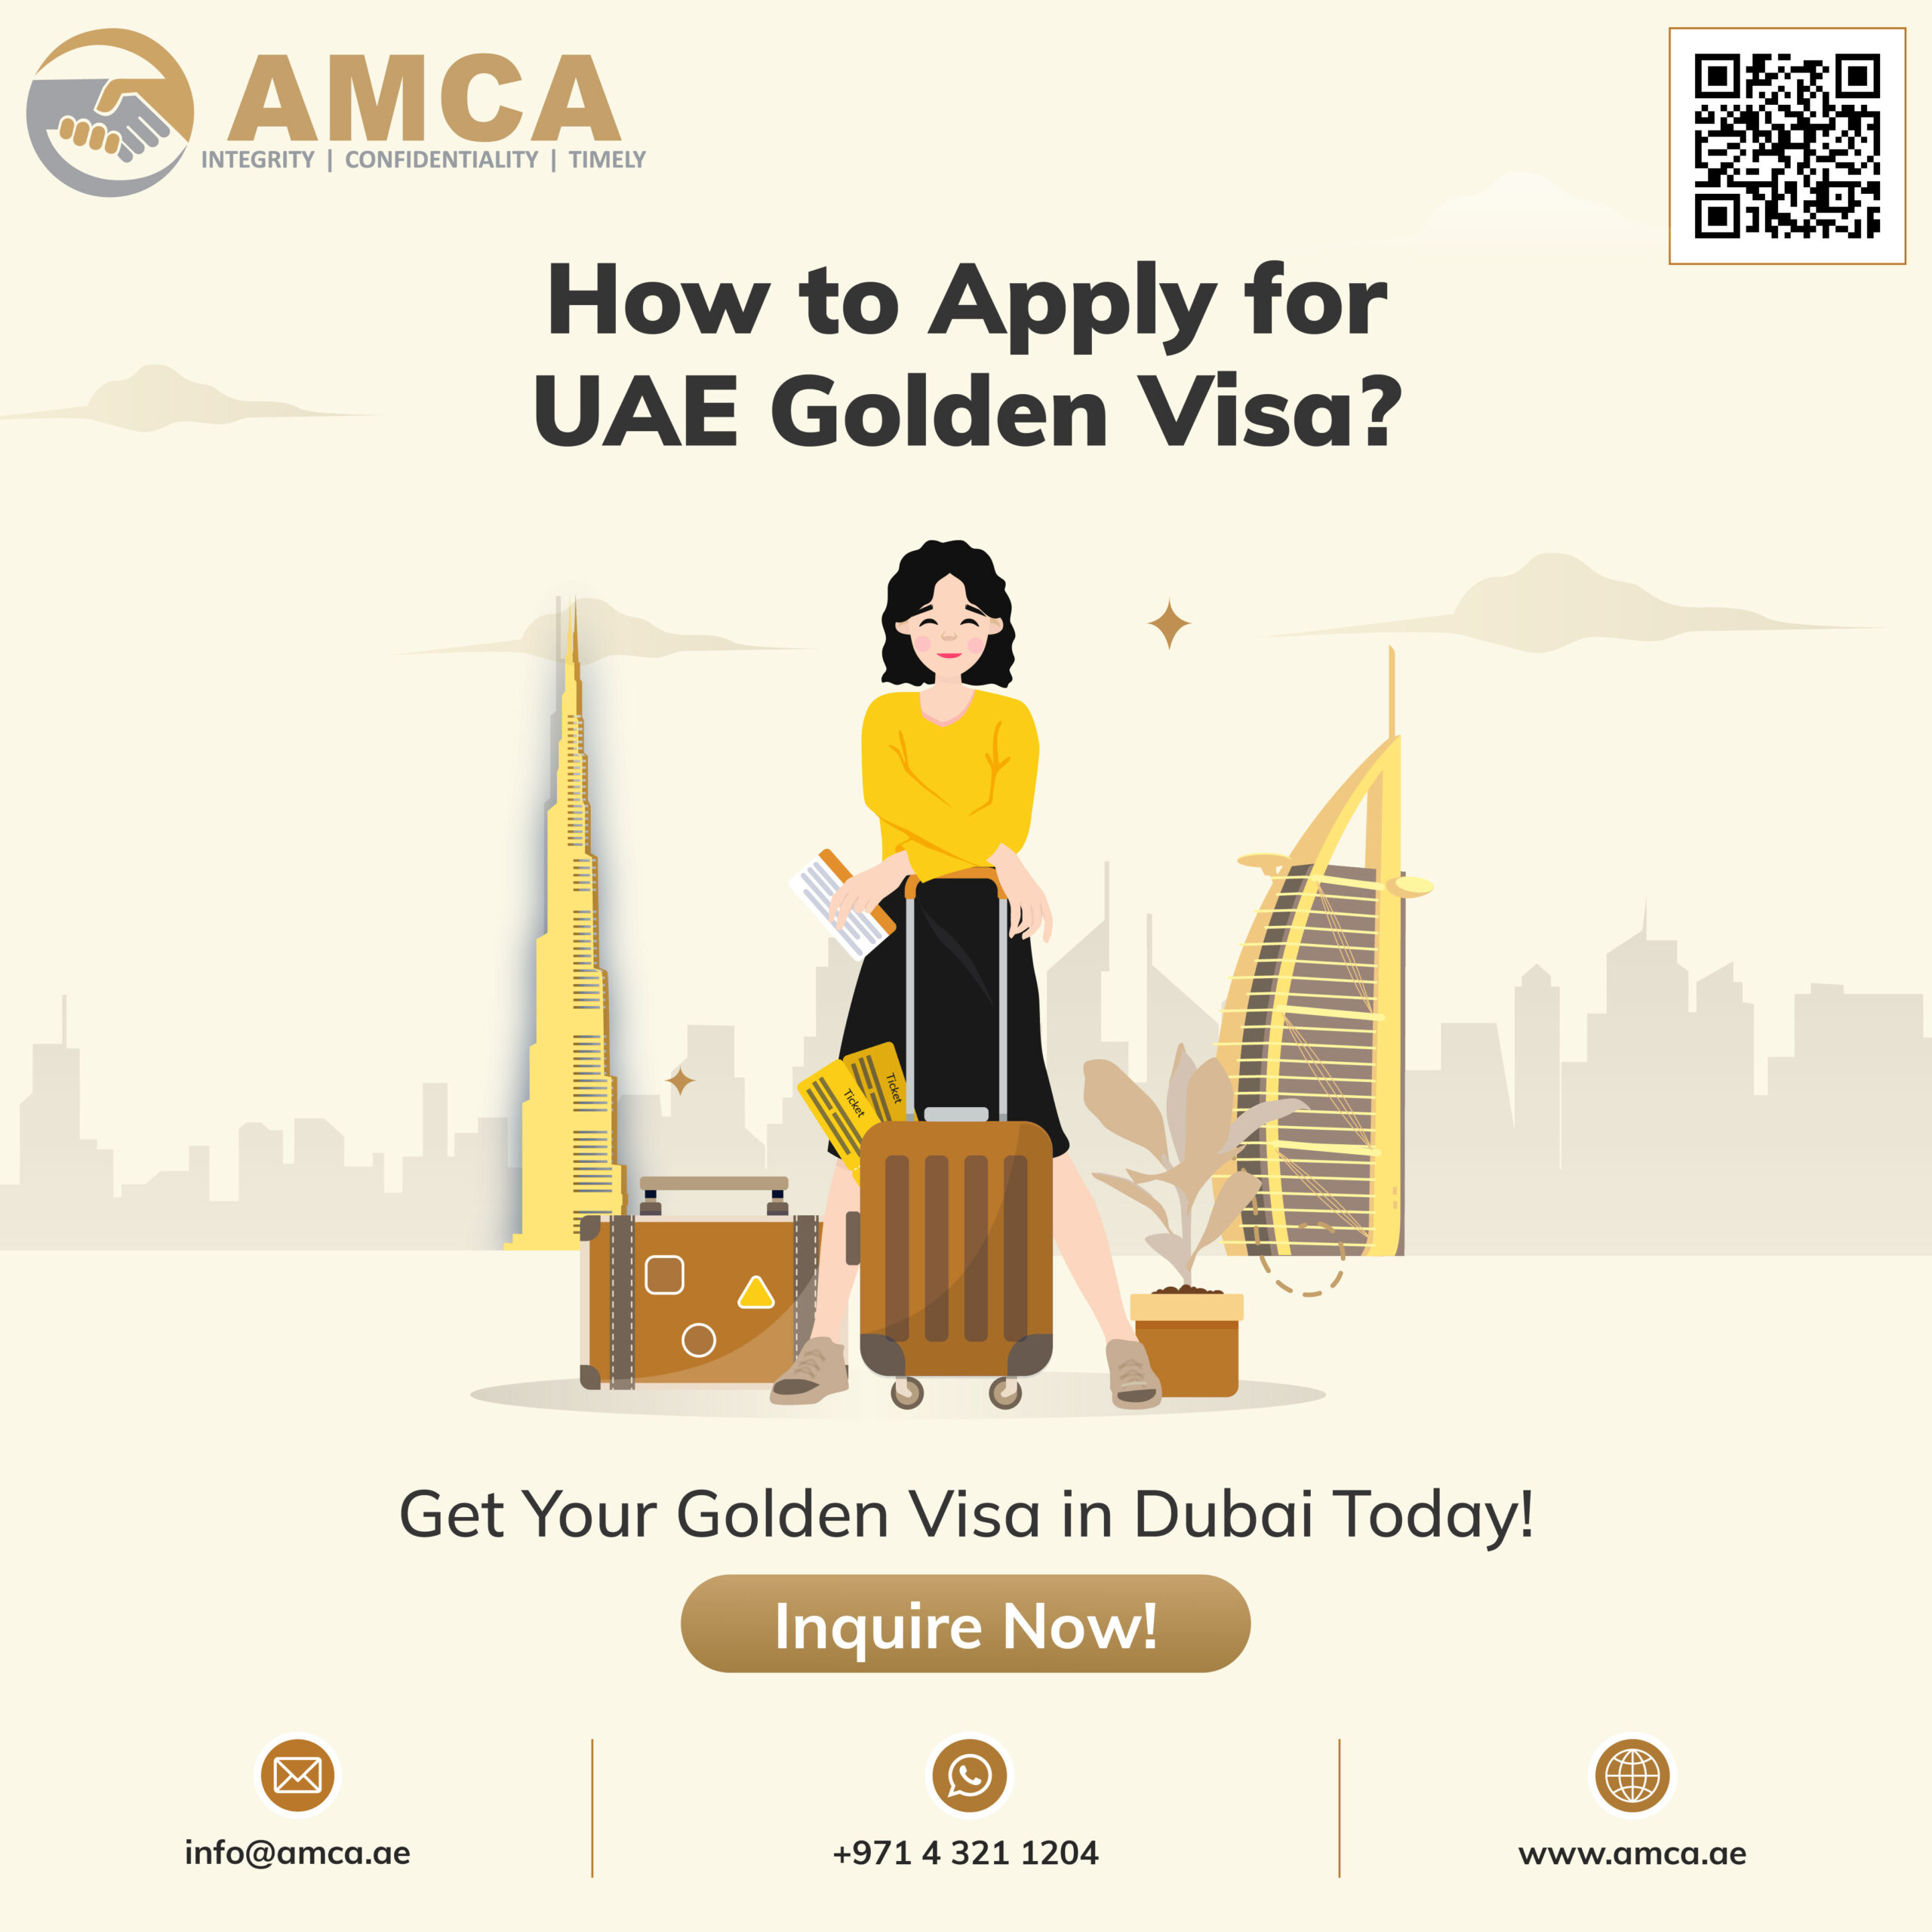 Get Your Golden Visa in Dubai Today! Inquire Now!